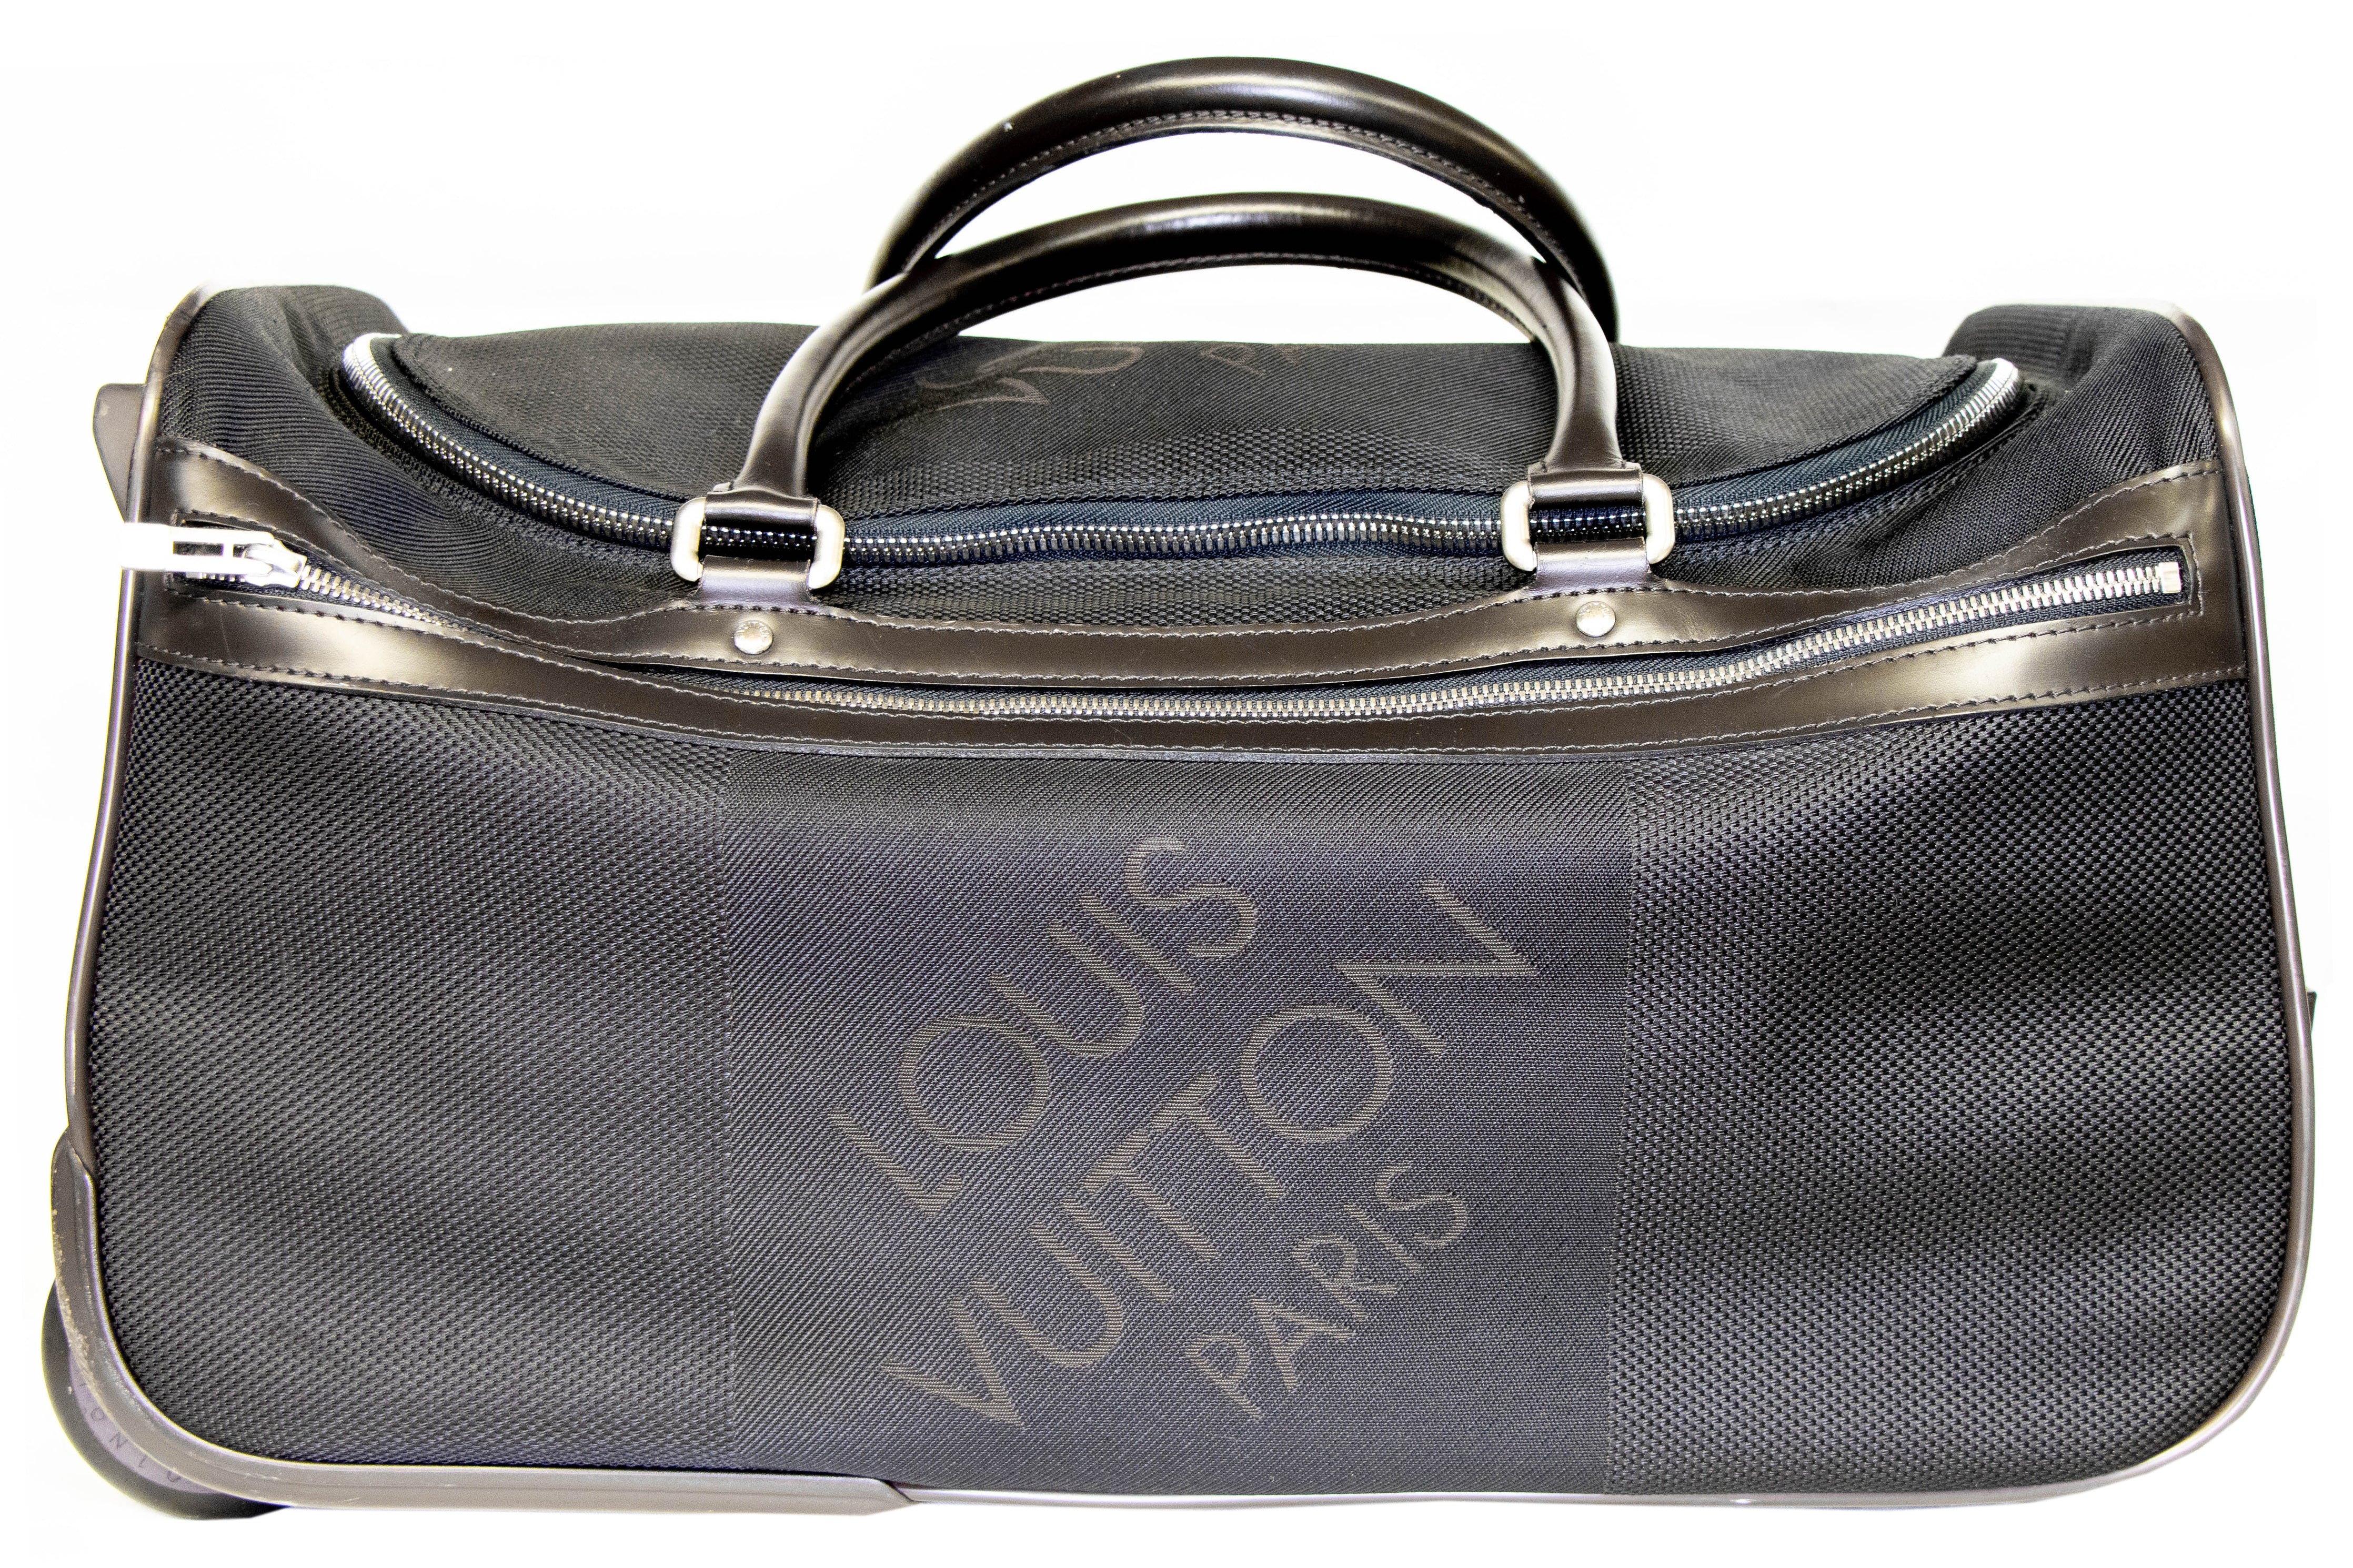 Travel Bags Louis Vuitton Black Damier GeanteEole 50 Rolling Duffle Bag 5lv91, Women's, Size: One Size